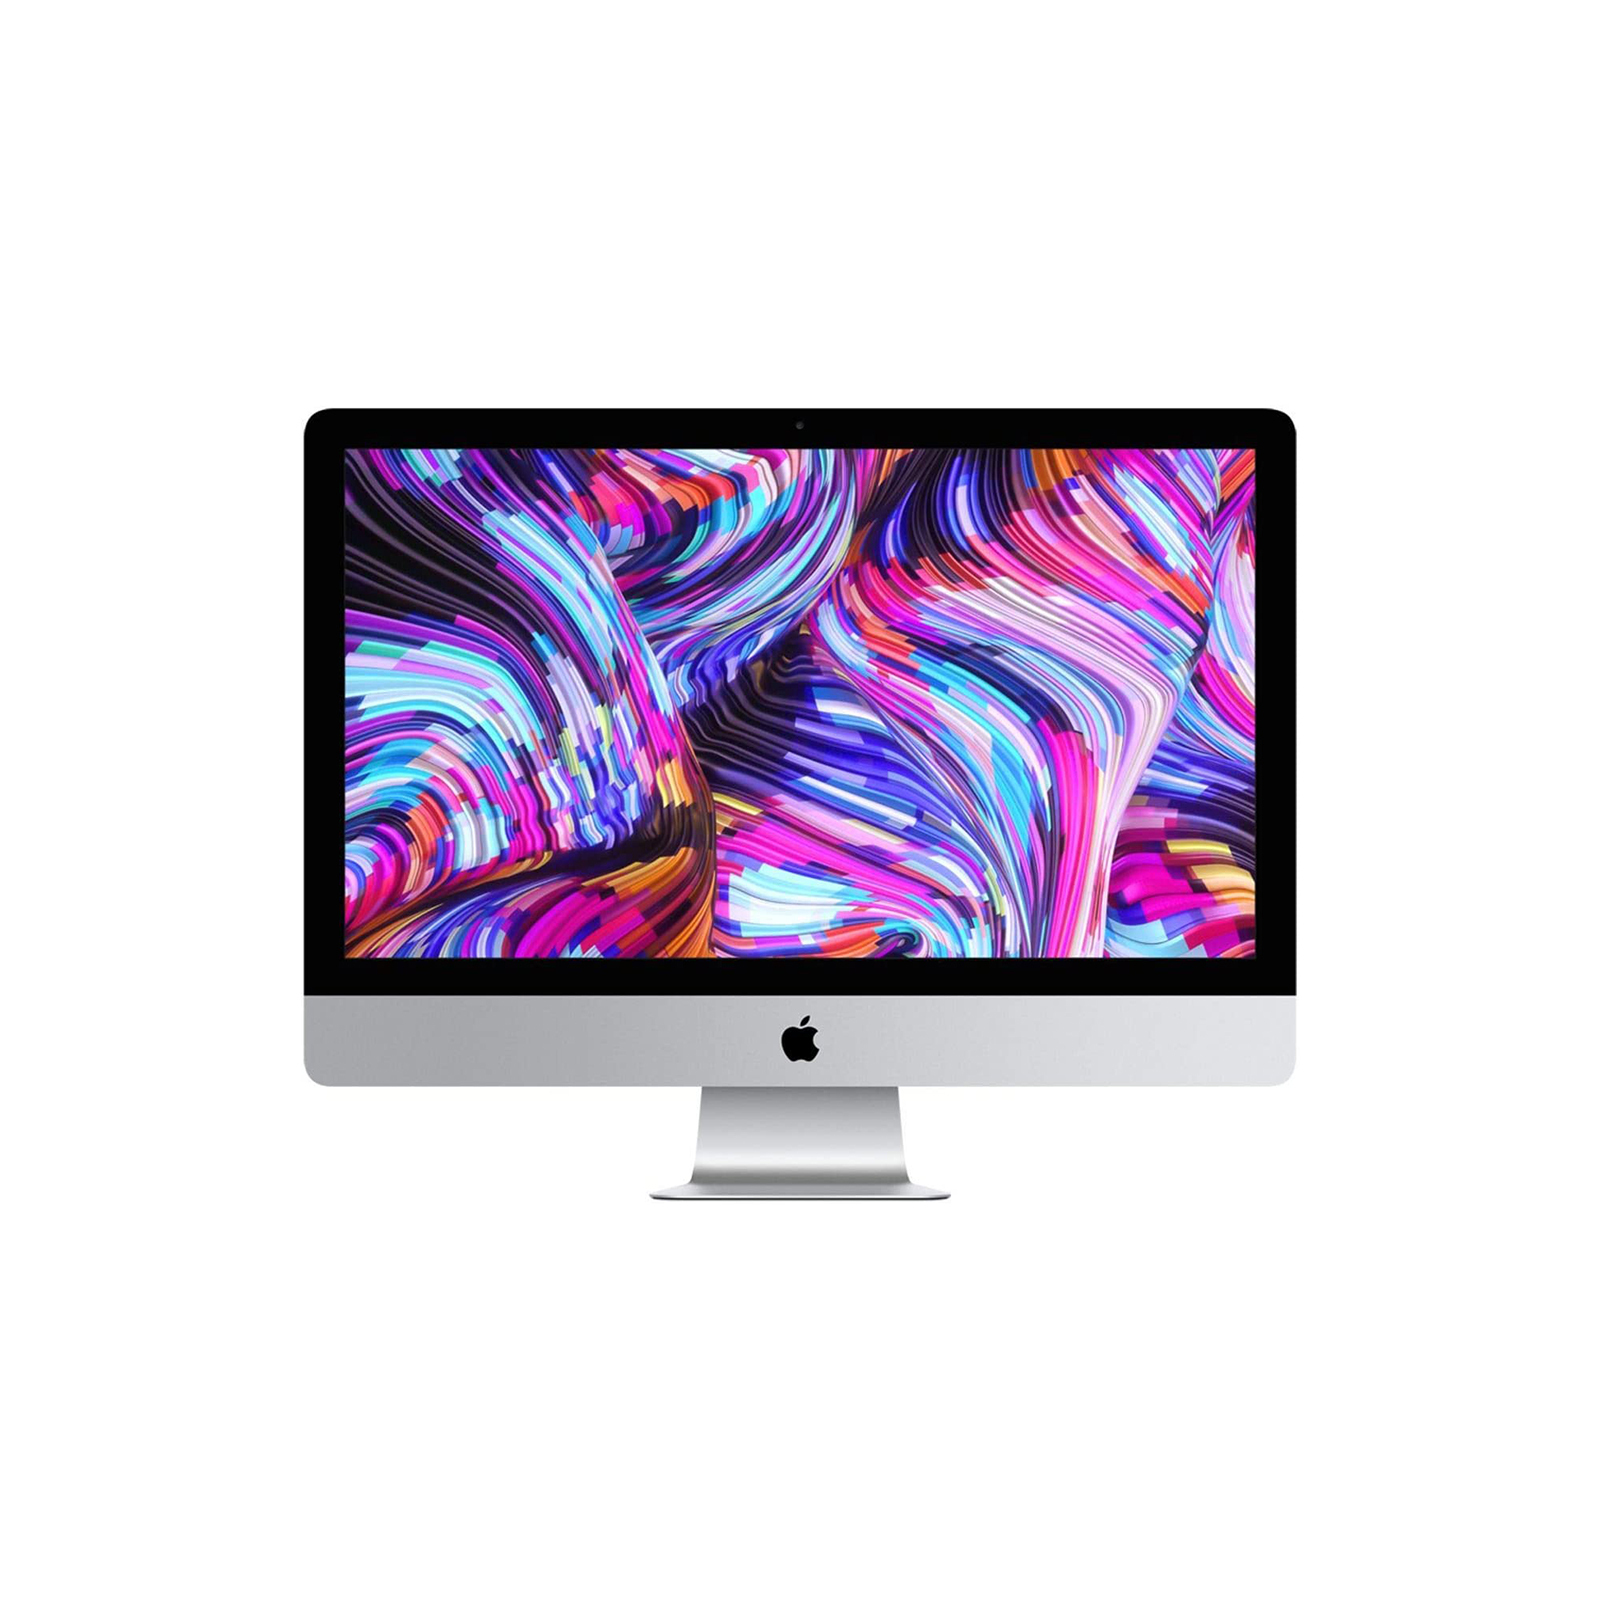 iMac 27" 5K Late 2015 -  Core i5 3.2Ghz / 8GB RAM / 1TB HDD / R9 M380 GPU